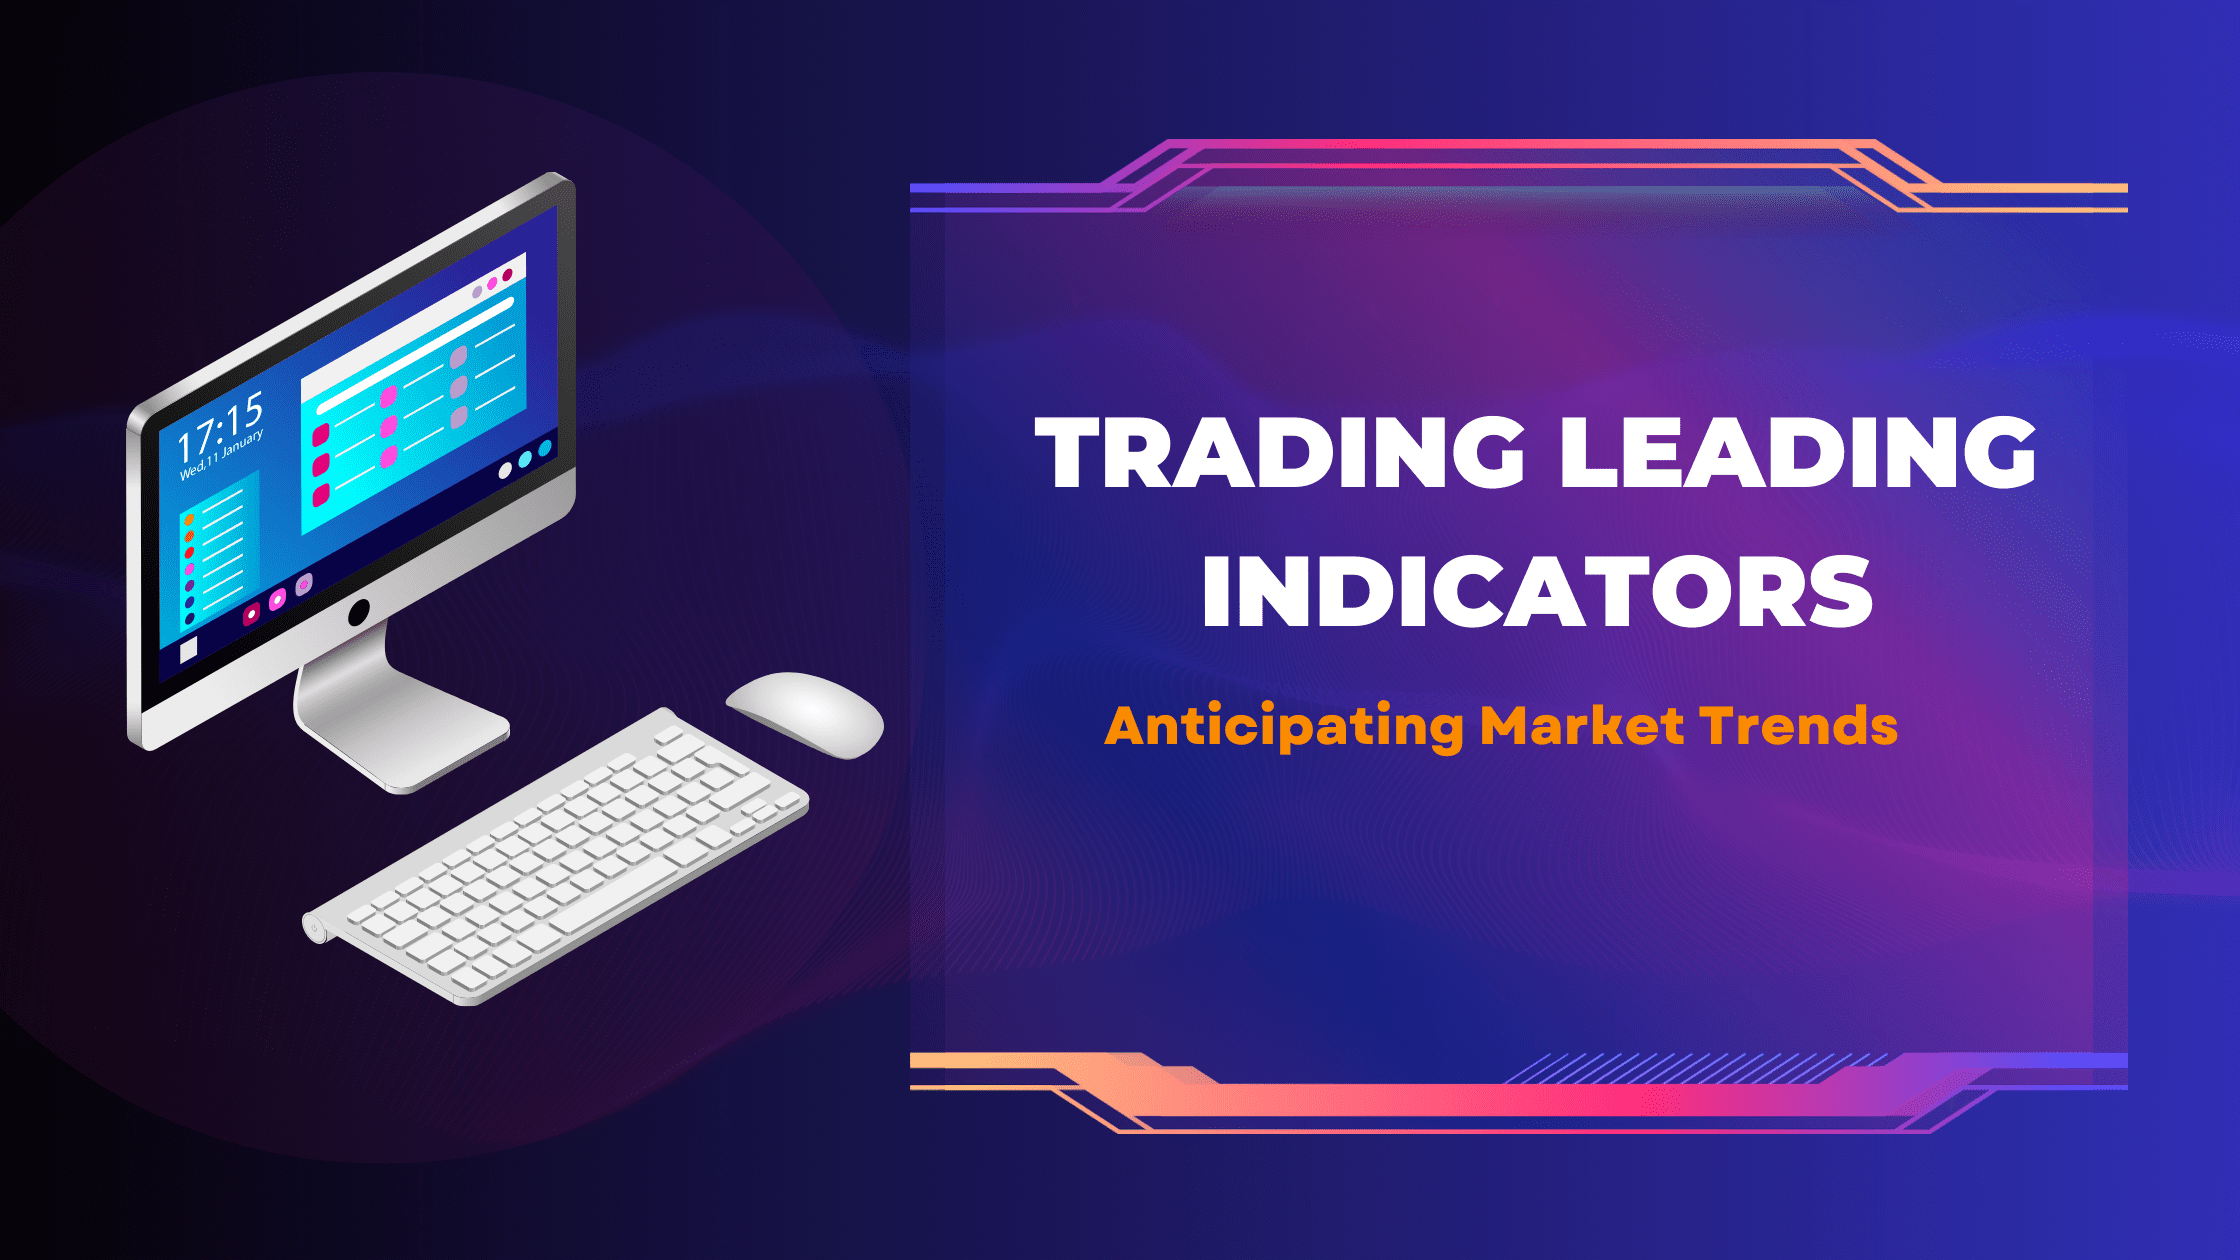 Trading Leading Indicators: Anticipating Market Trends